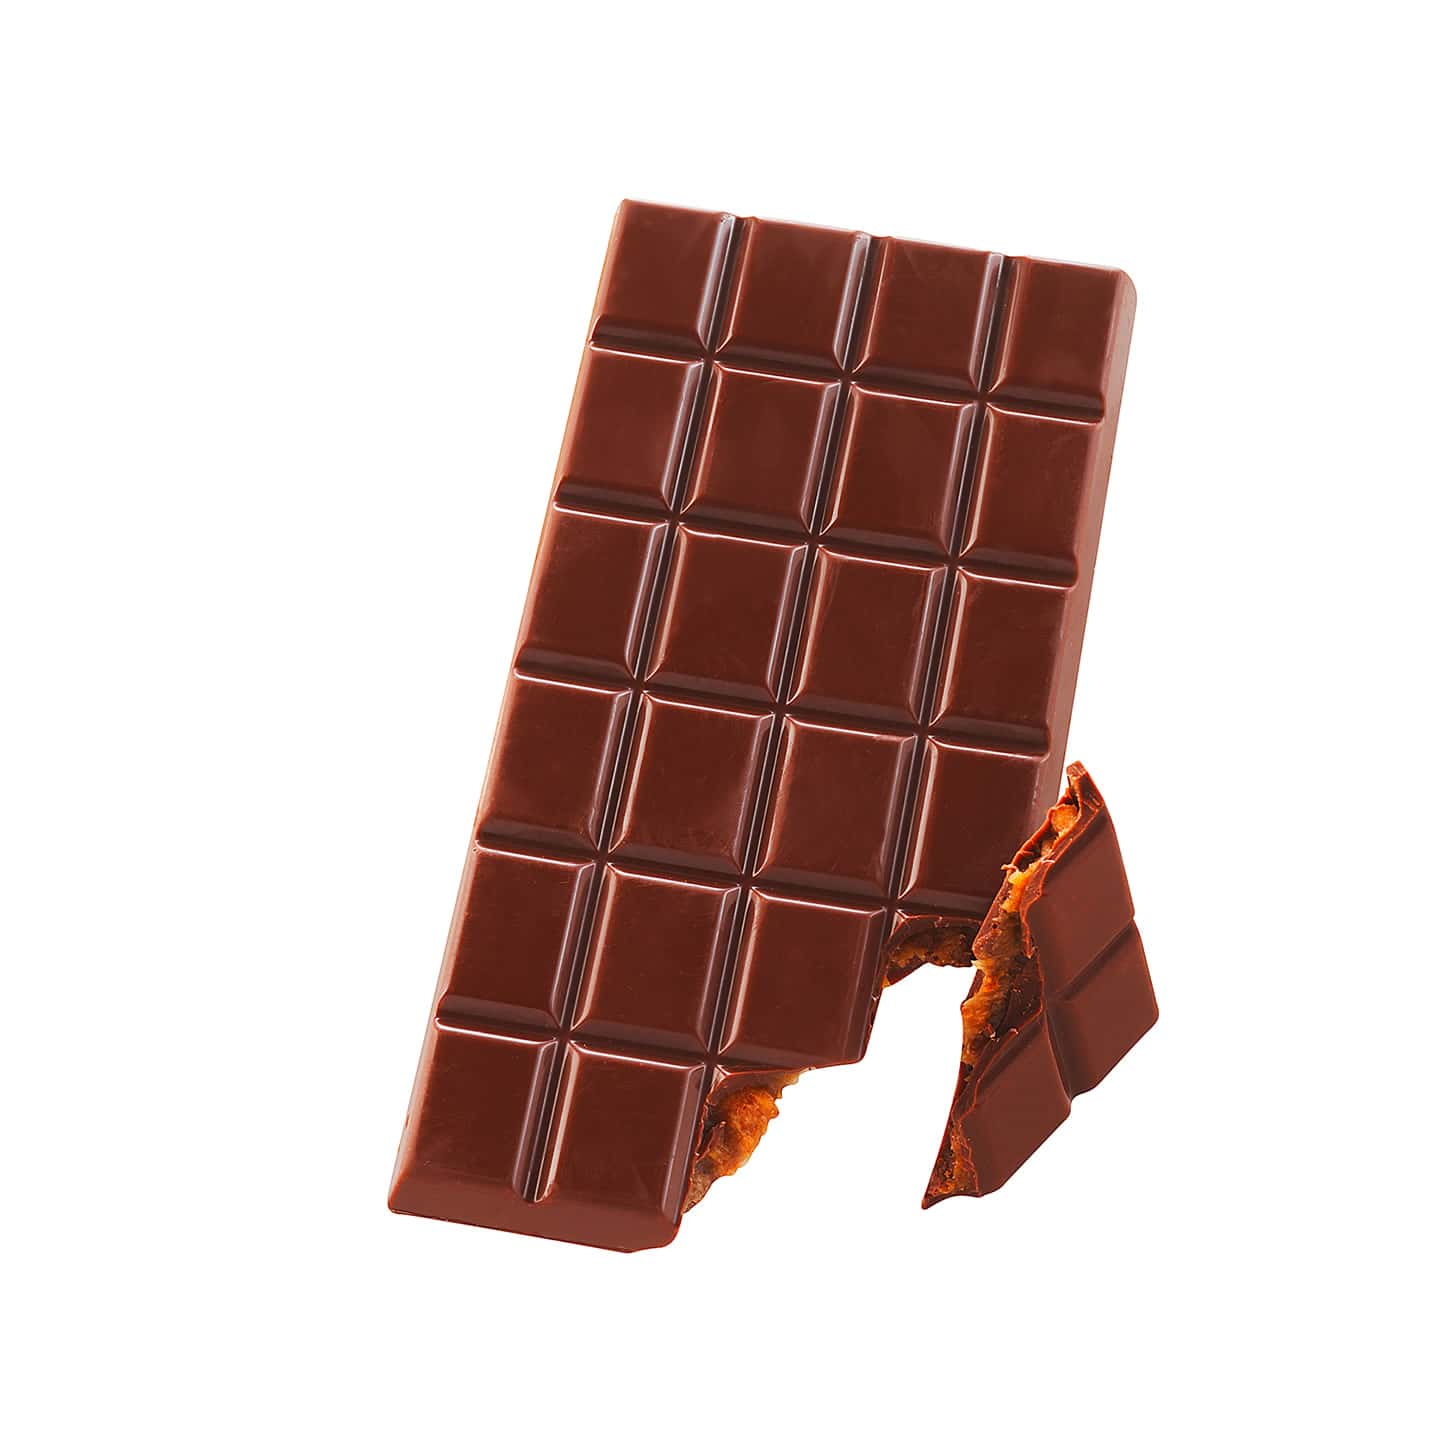 Tablette Chocolat Caramel Noix 43% 110g Vega